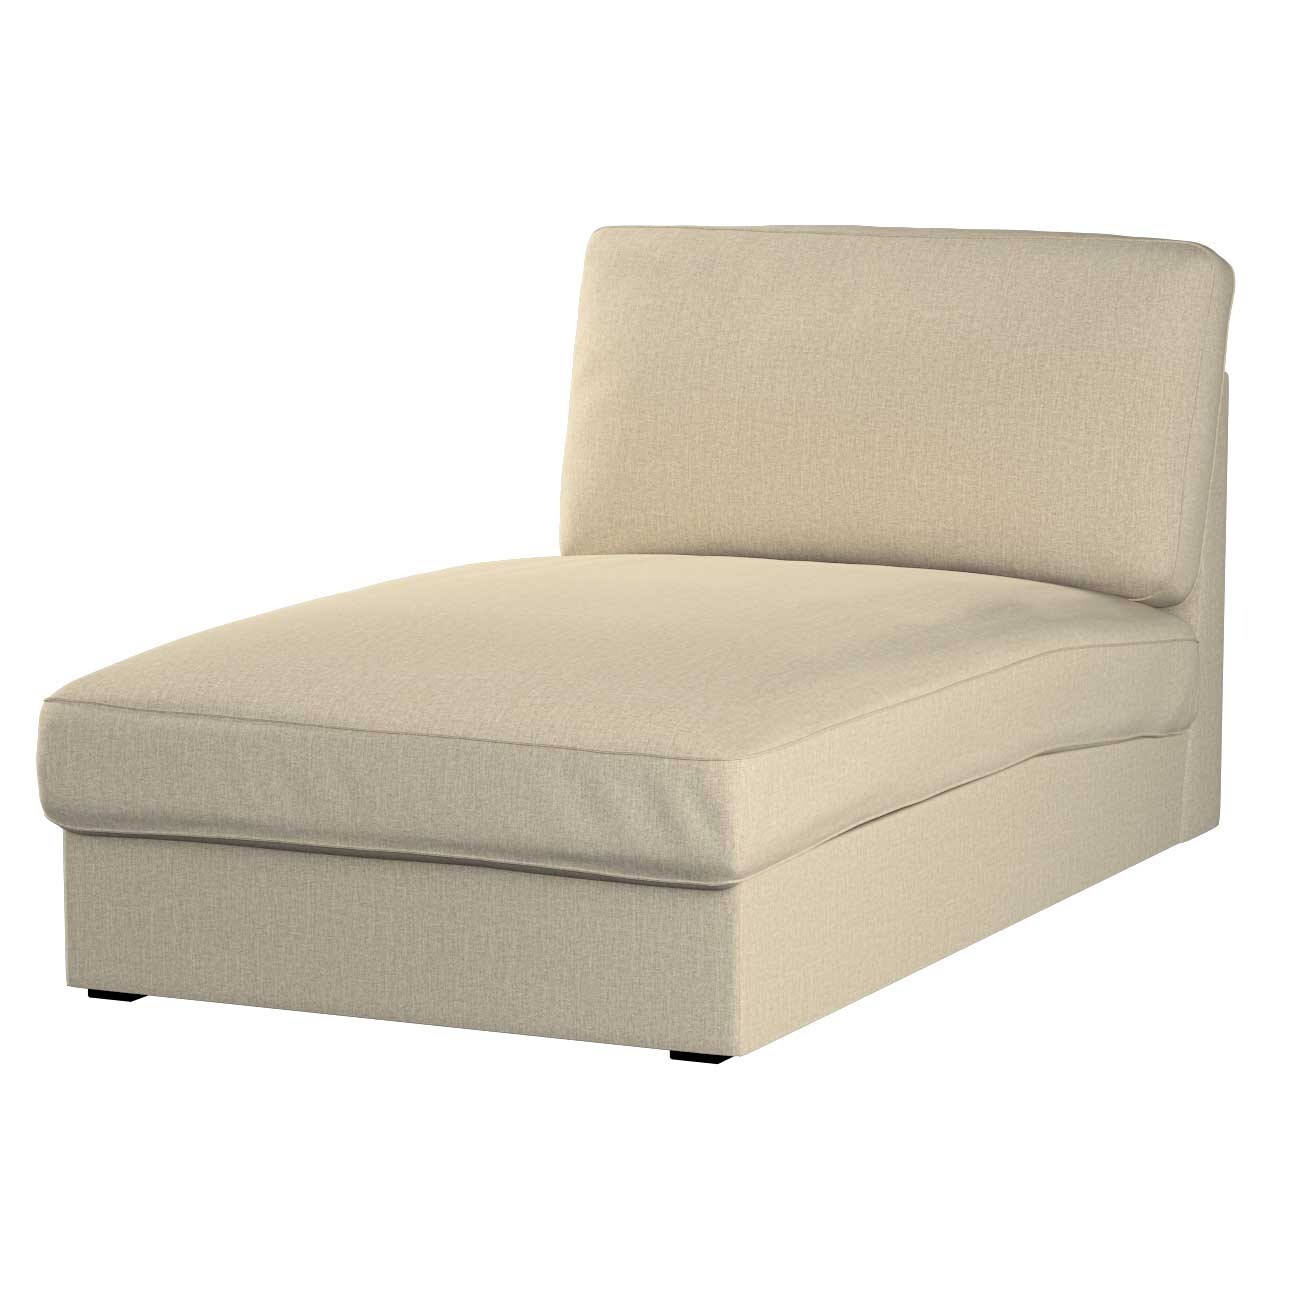 Bezug für Kivik Recamiere Sofa, beige- grau, Bezug für Kivik Recamiere, Cit günstig online kaufen